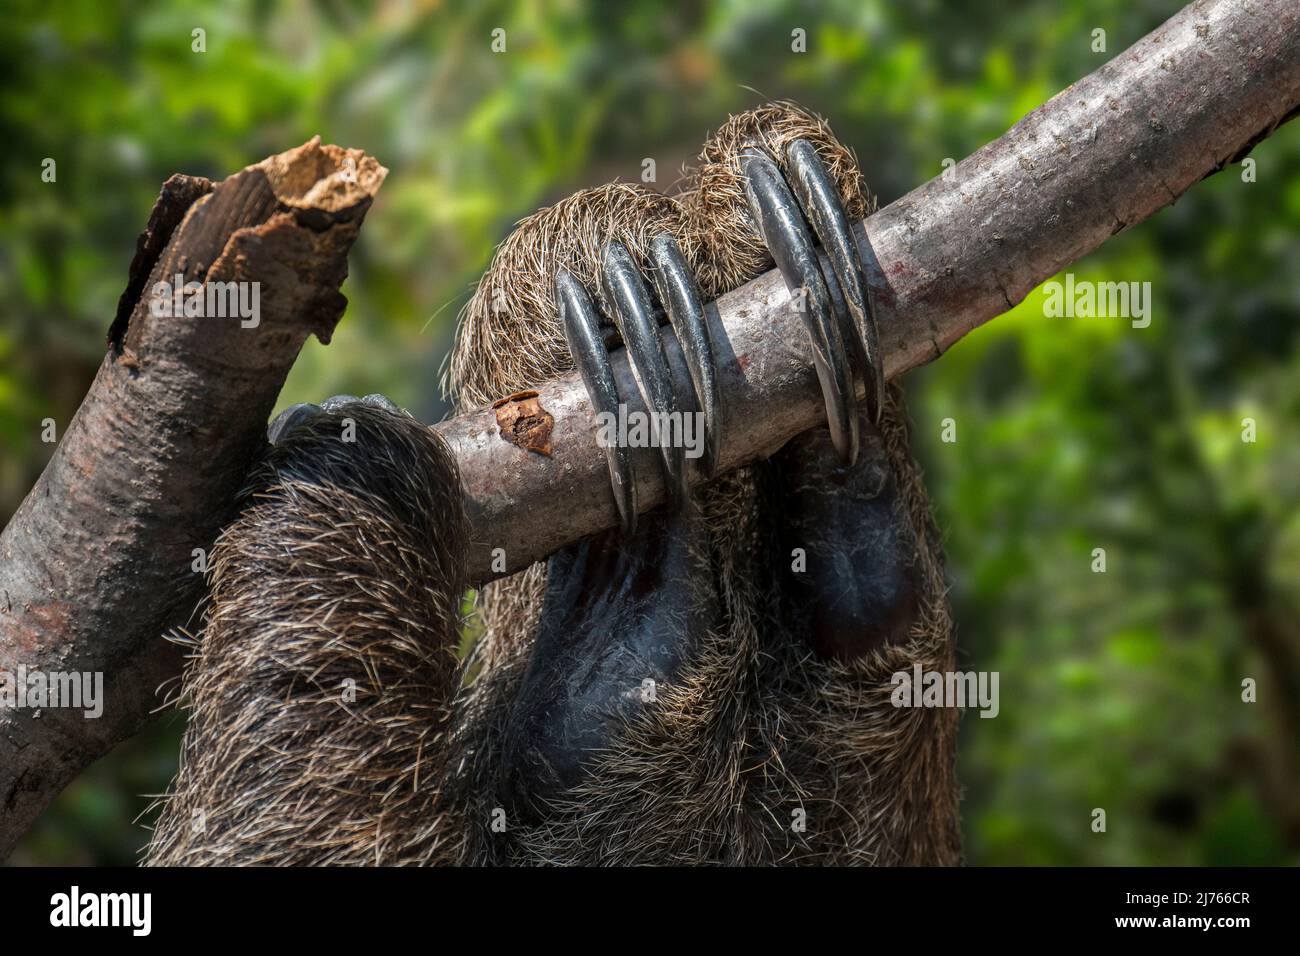 Linnaeus's two-toed sloth / Southern two-toed sloth / Linne's two-toed sloth (Choloepus didactylus / Bradypus didactylus) close-up di artigli Foto Stock